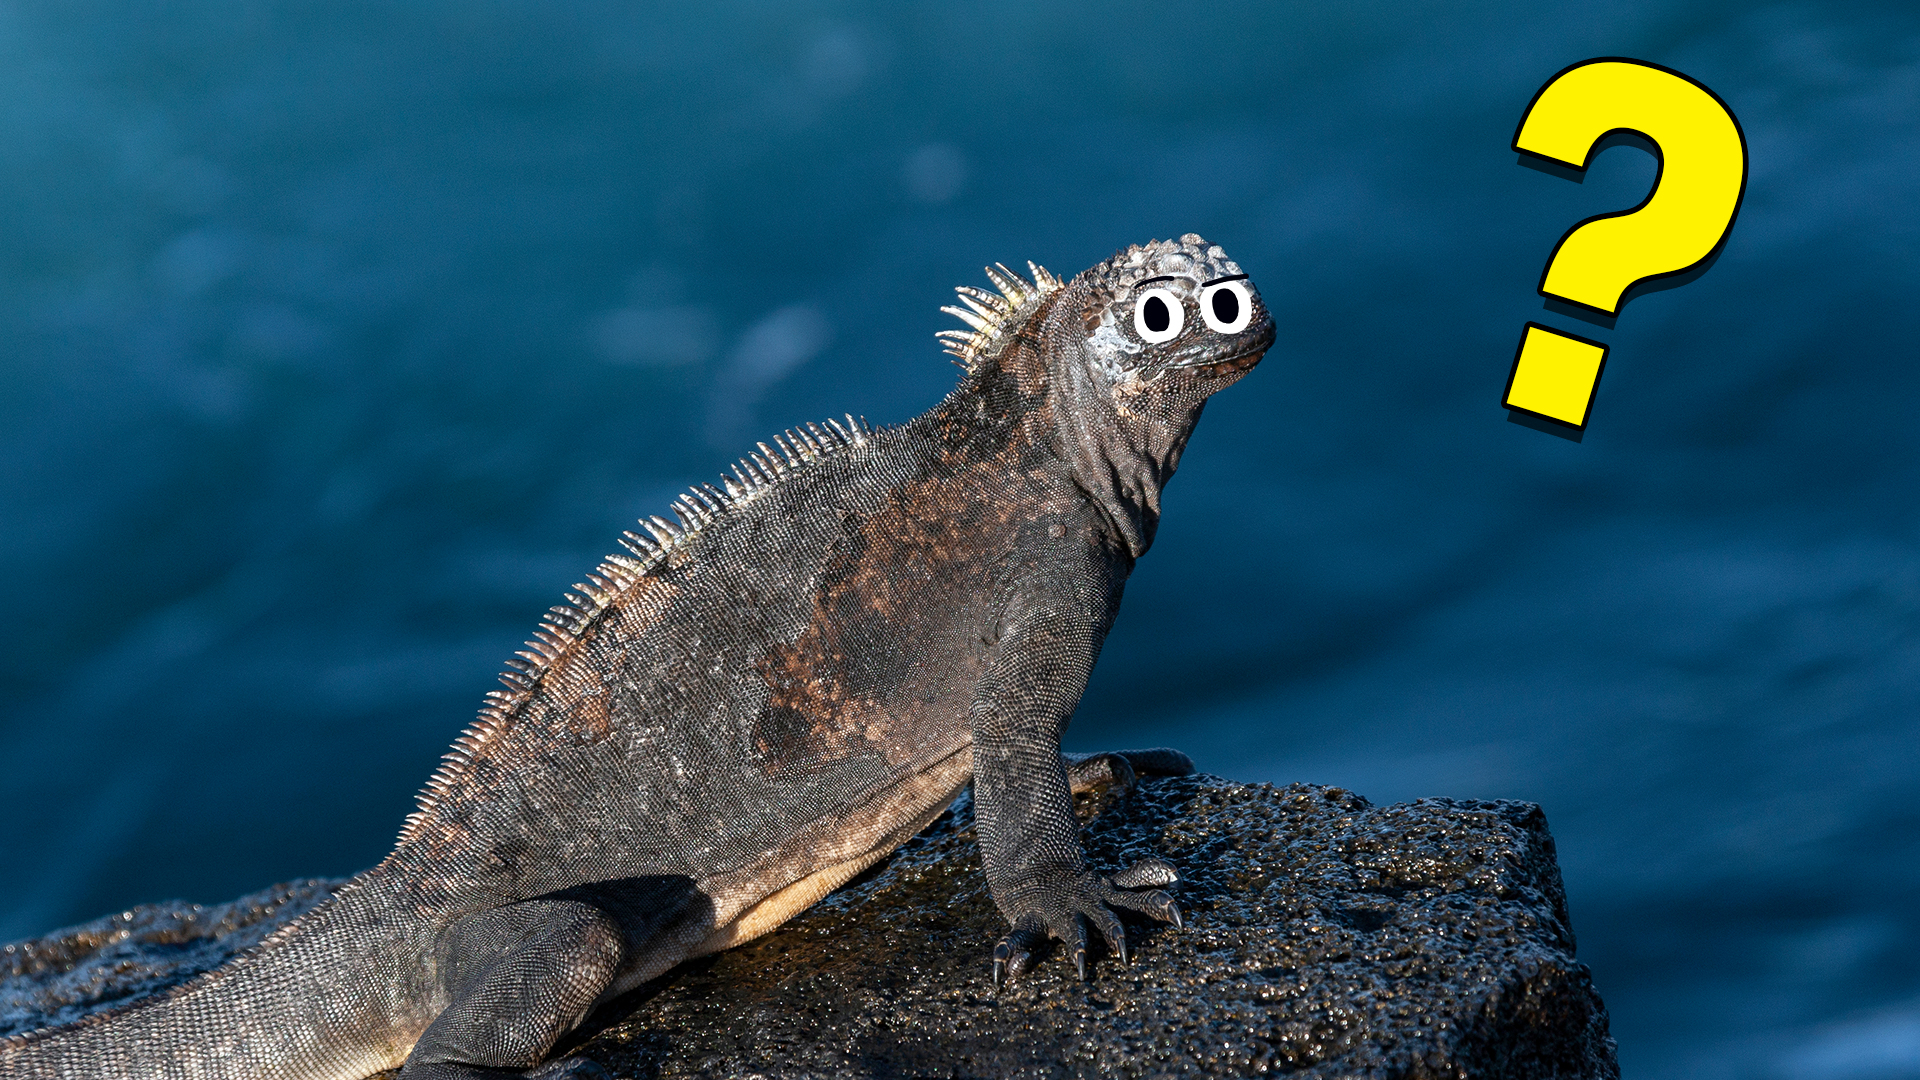 An iguana looks confused